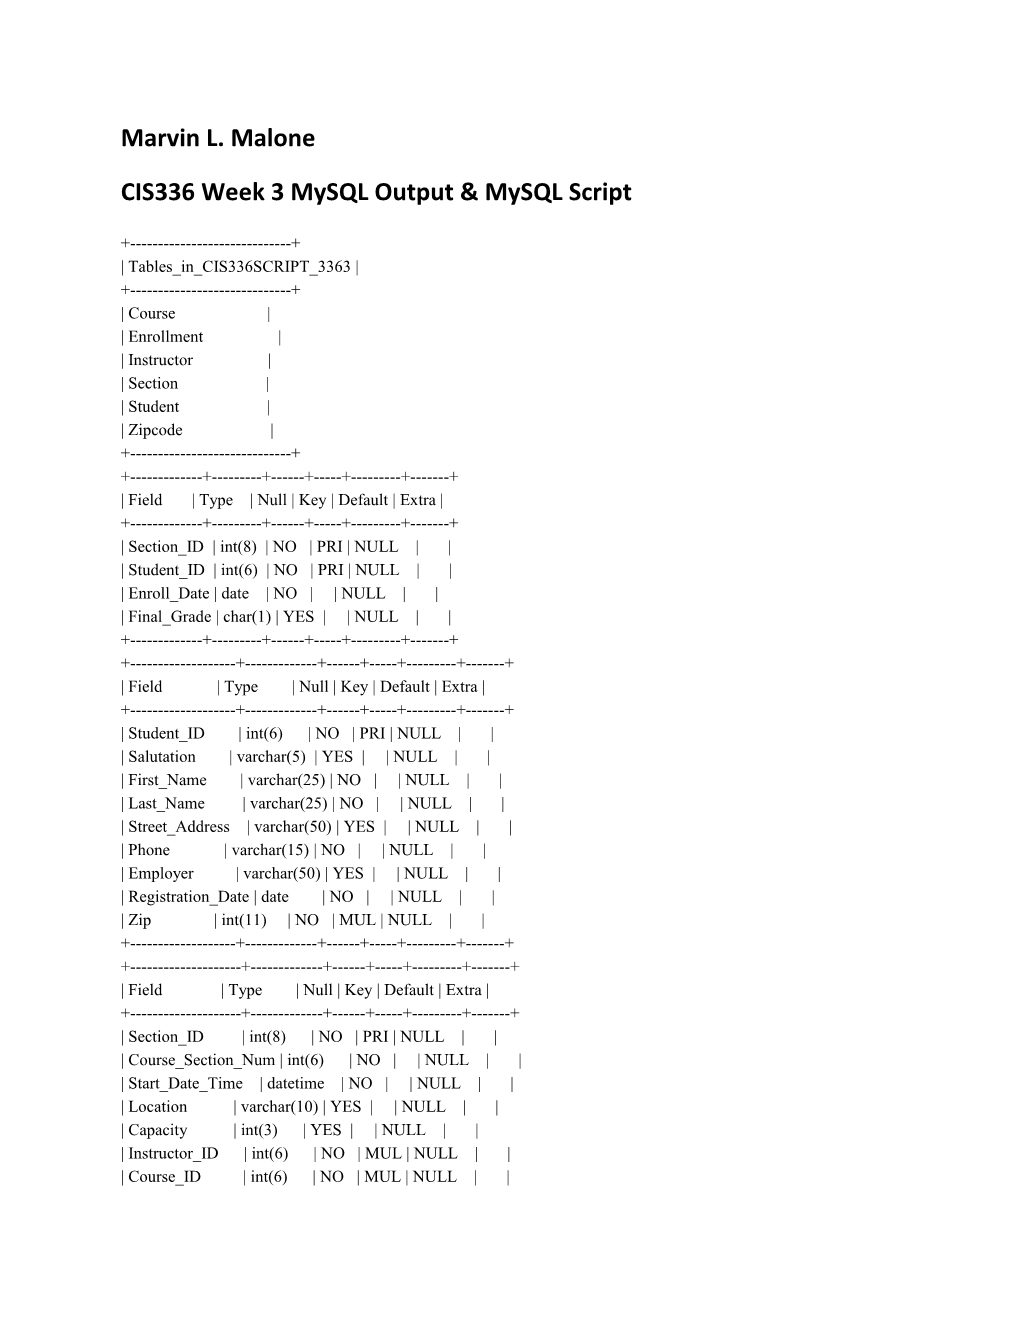 CIS336 Week 3 Mysql Output & Mysql Script